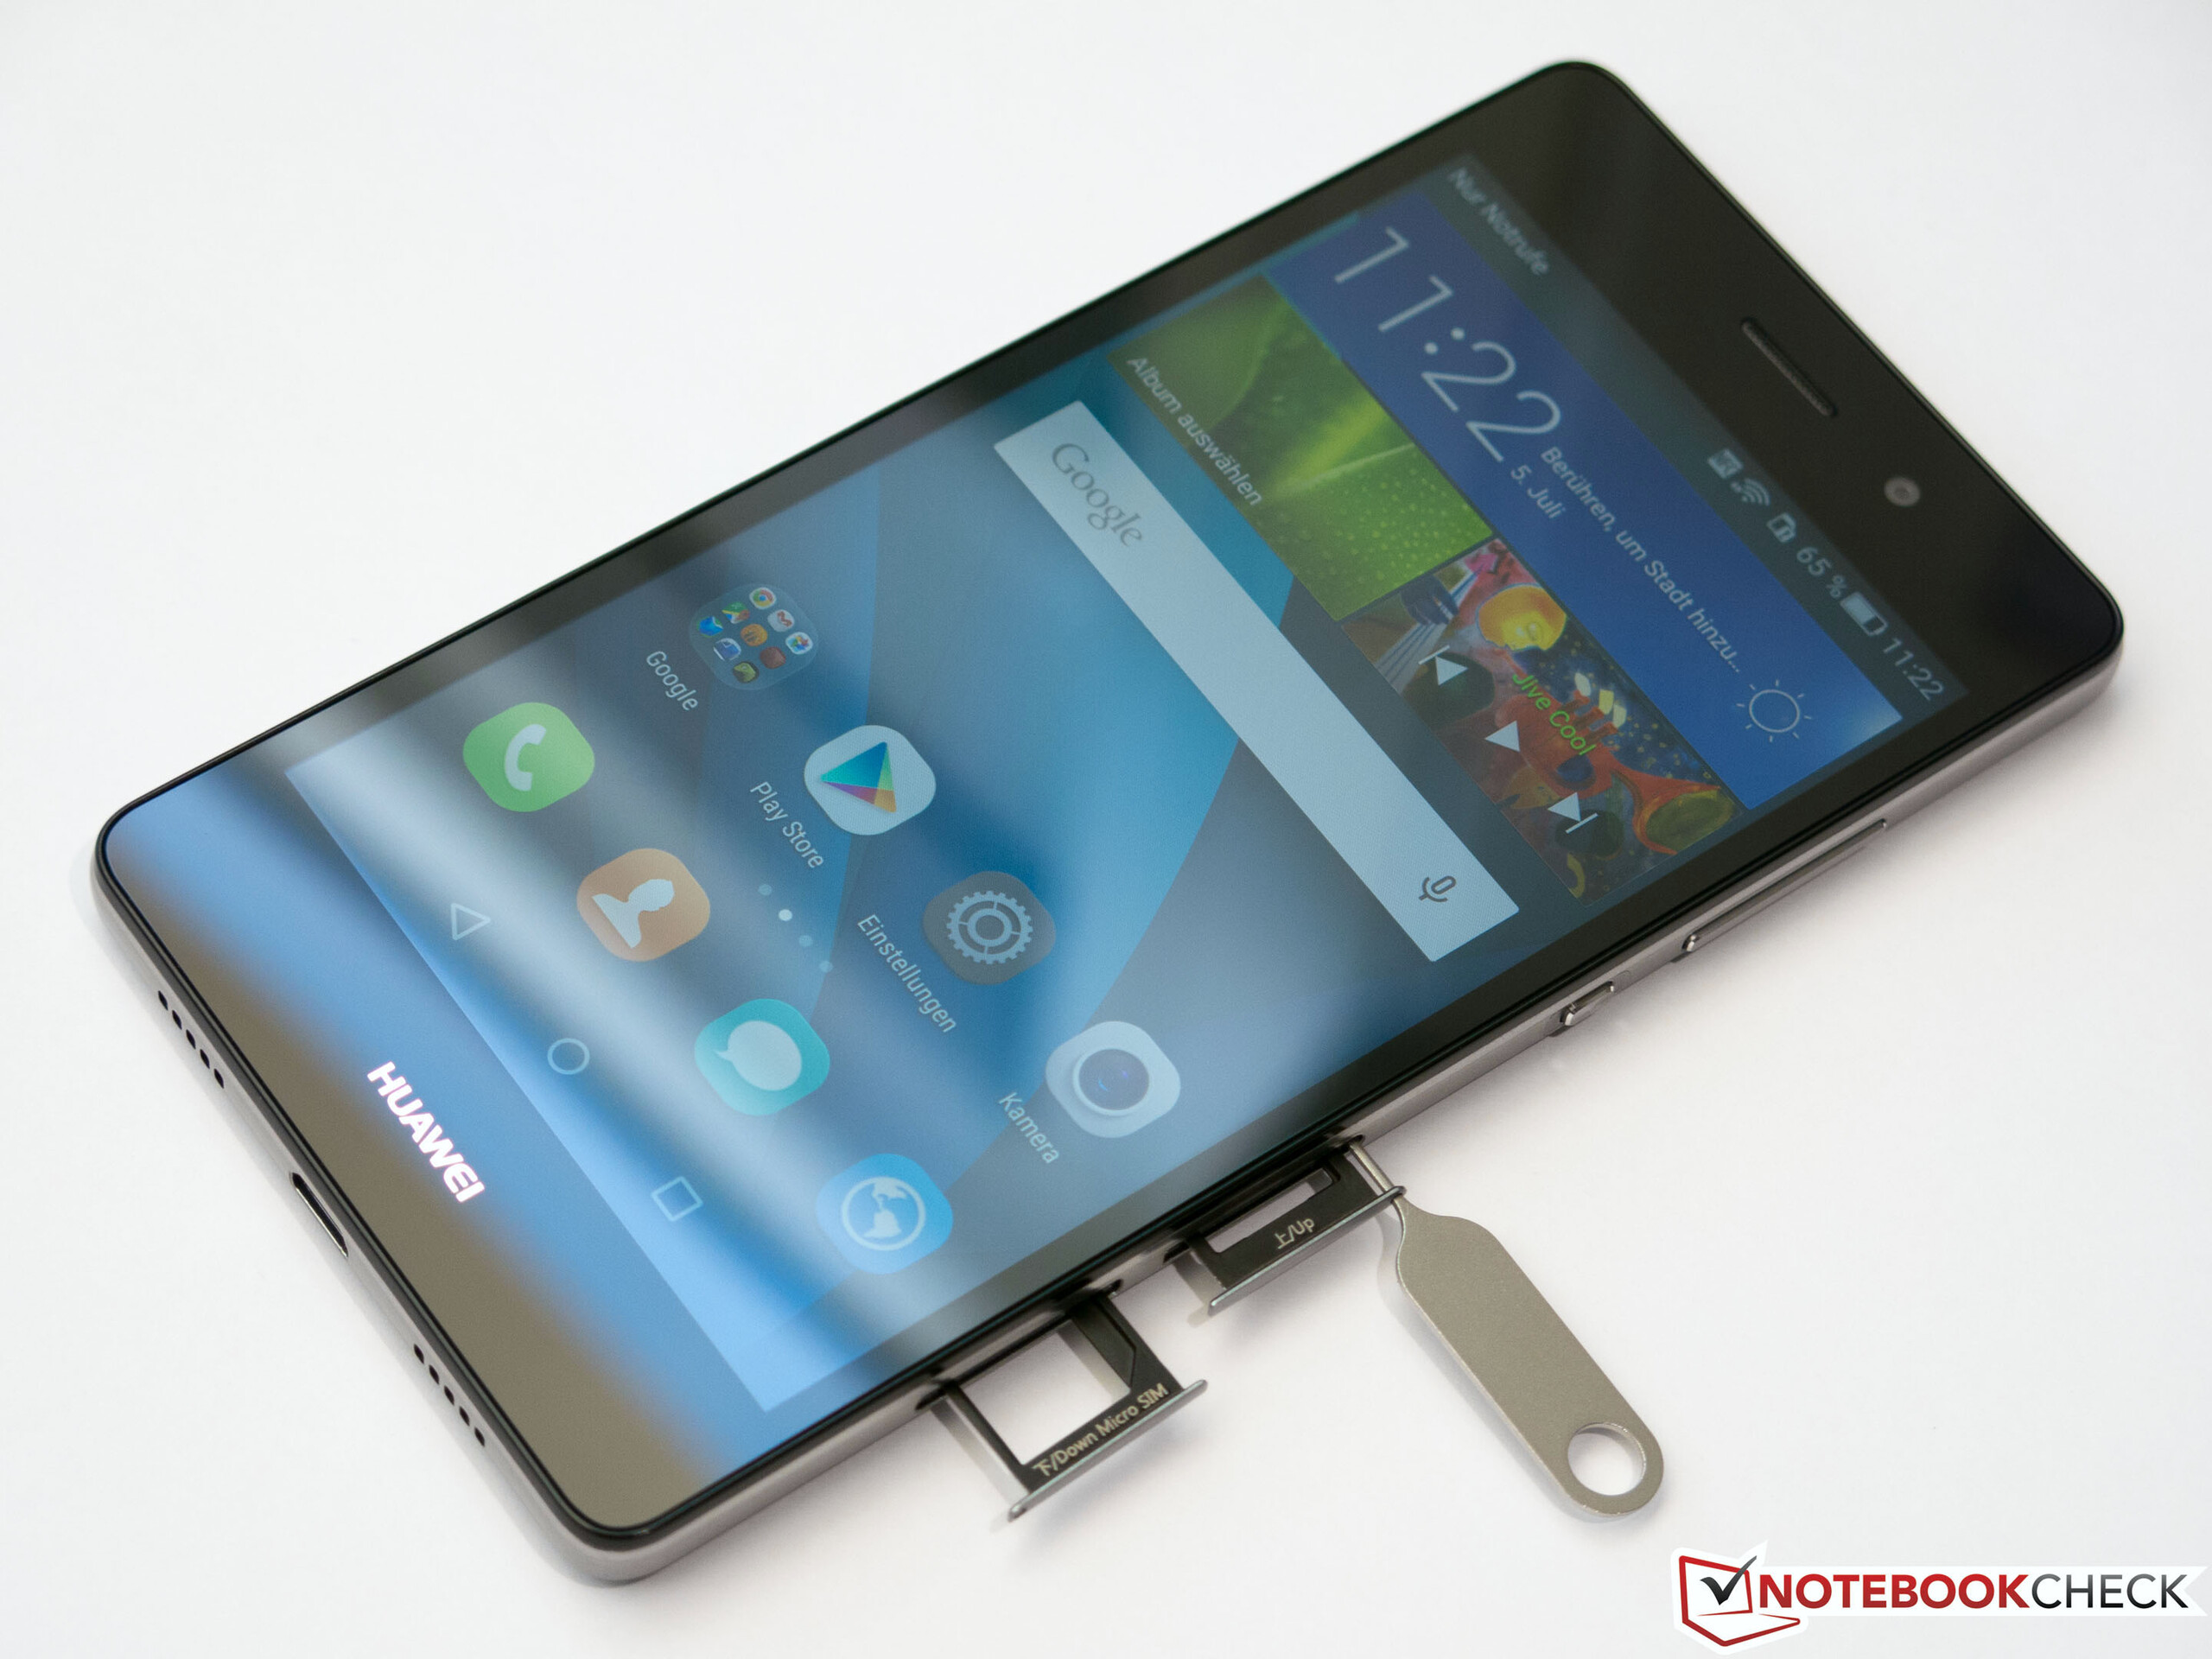 woestenij bellen conjunctie Huawei P8 lite Smartphone Review - NotebookCheck.net Reviews